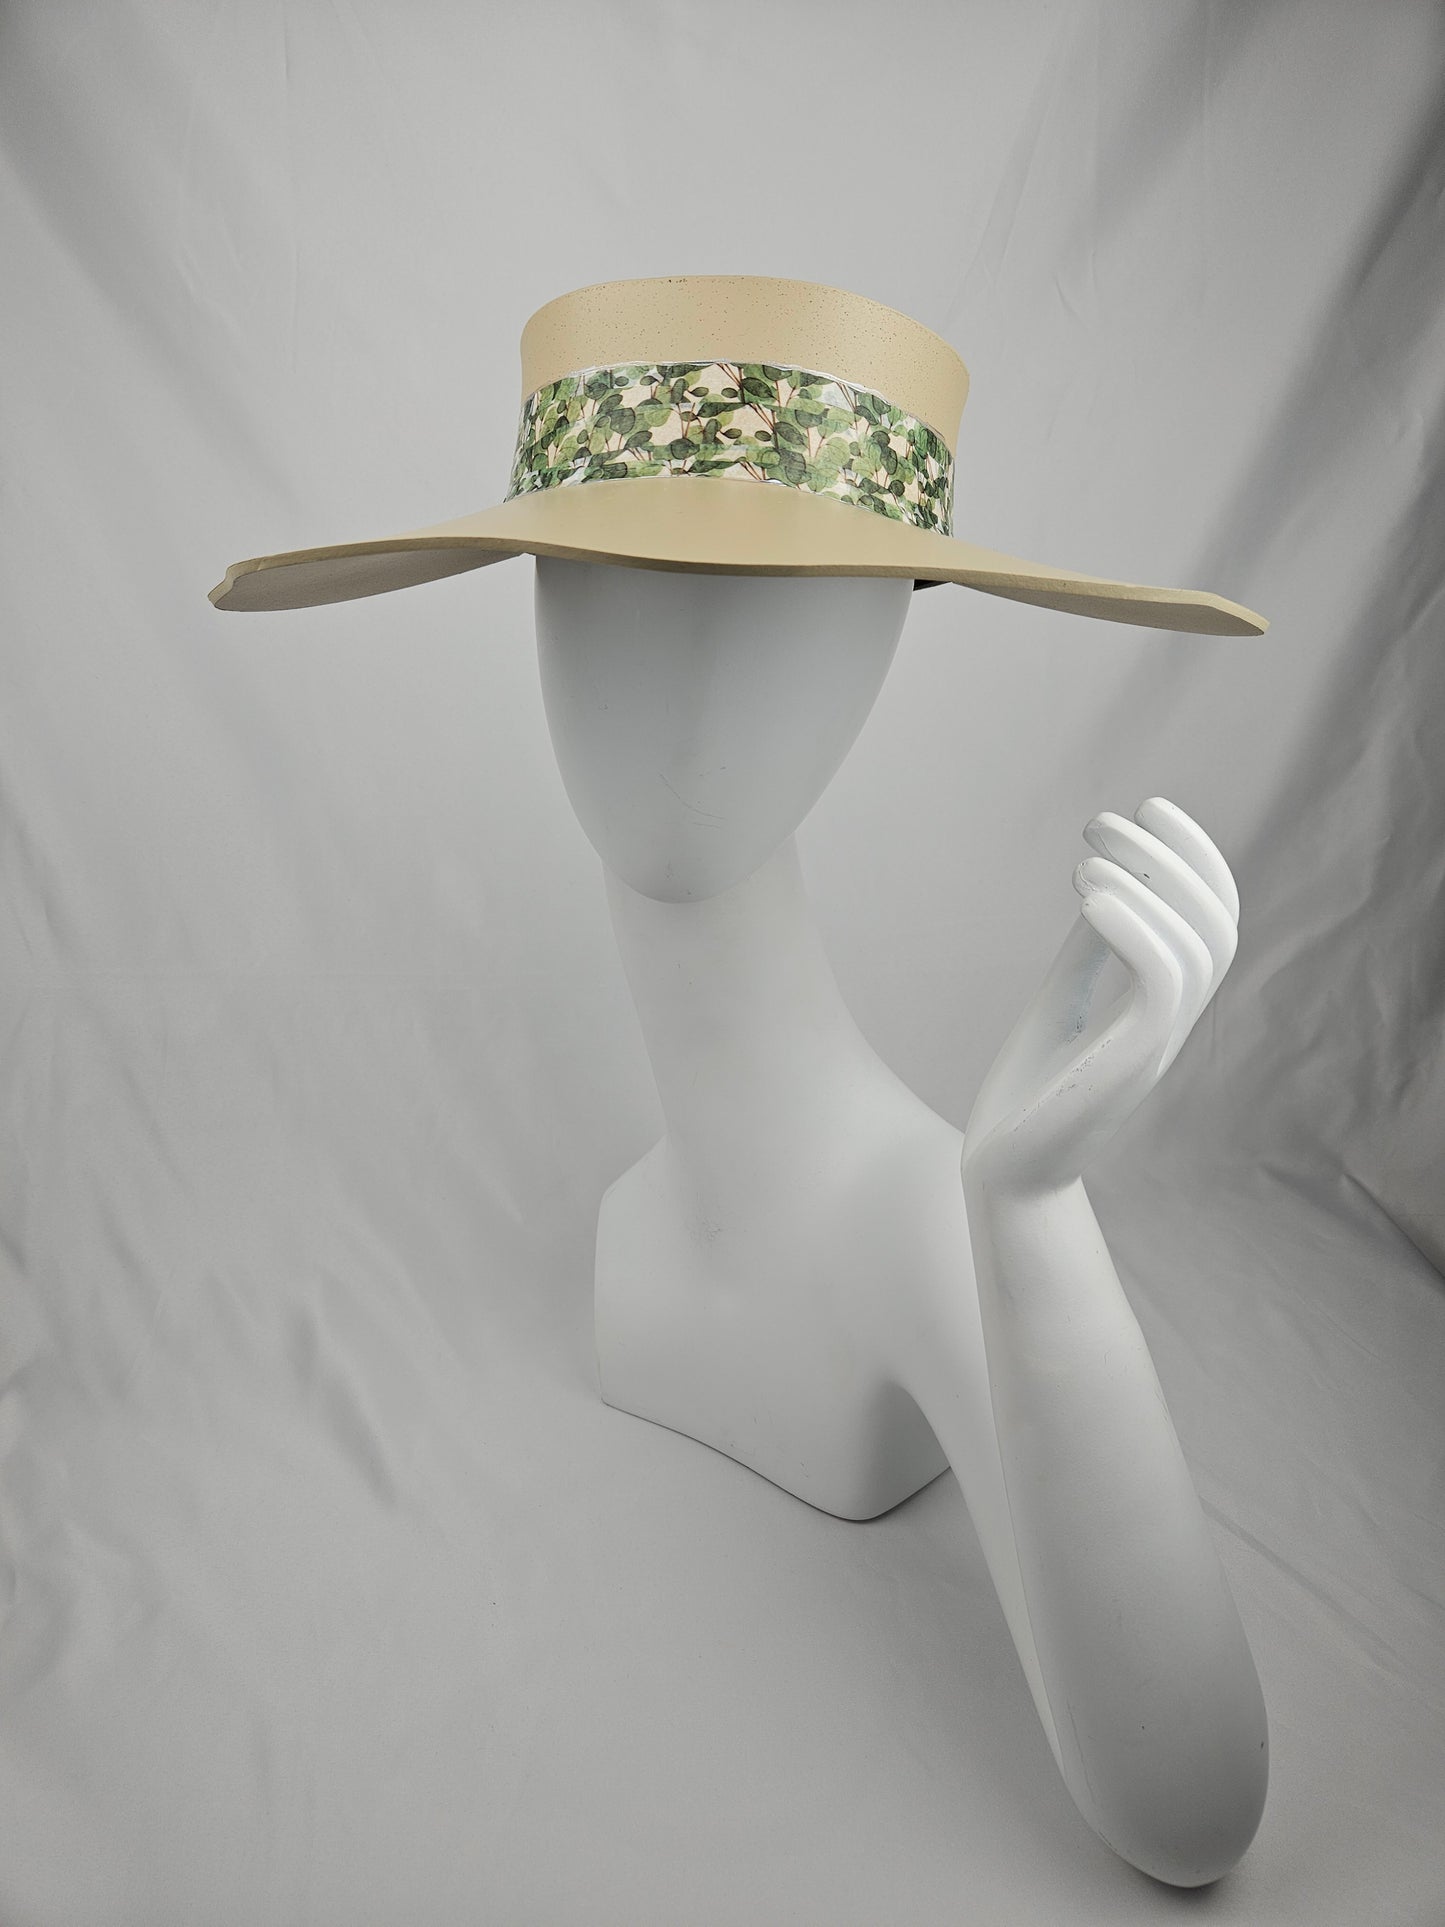 Beautiful Beige Lotus Sun Visor Hat with Green Leaf Band: 1950s, Walks, Brunch, Tea, Golf, Wedding, Church, No Headache, Derby